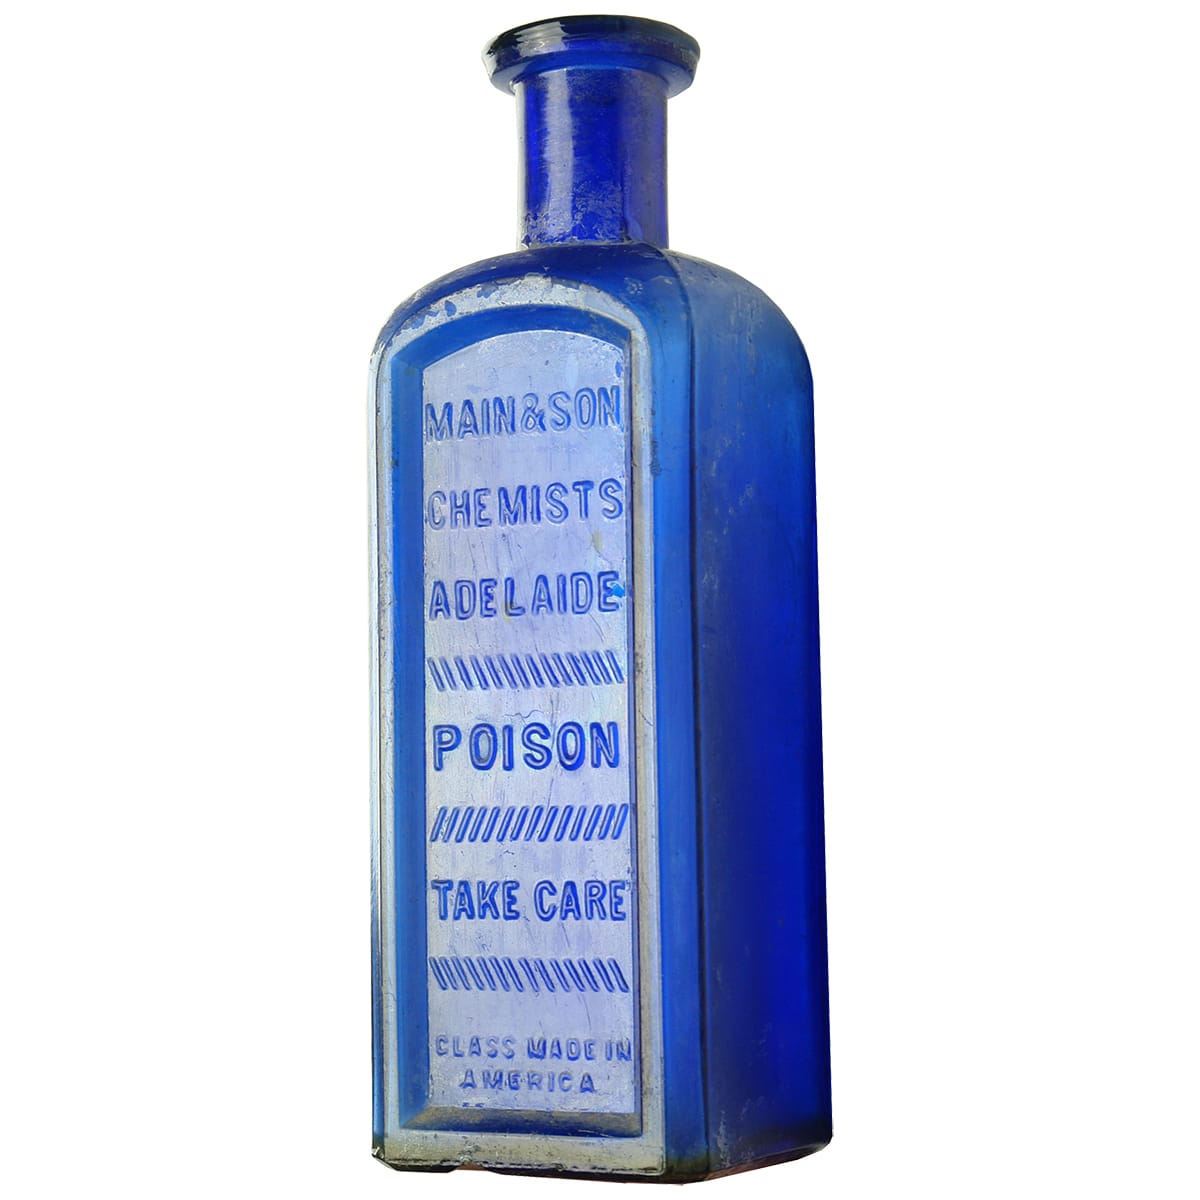 Poison. Main & Son, Adelaide. Cobalt. 8 oz.